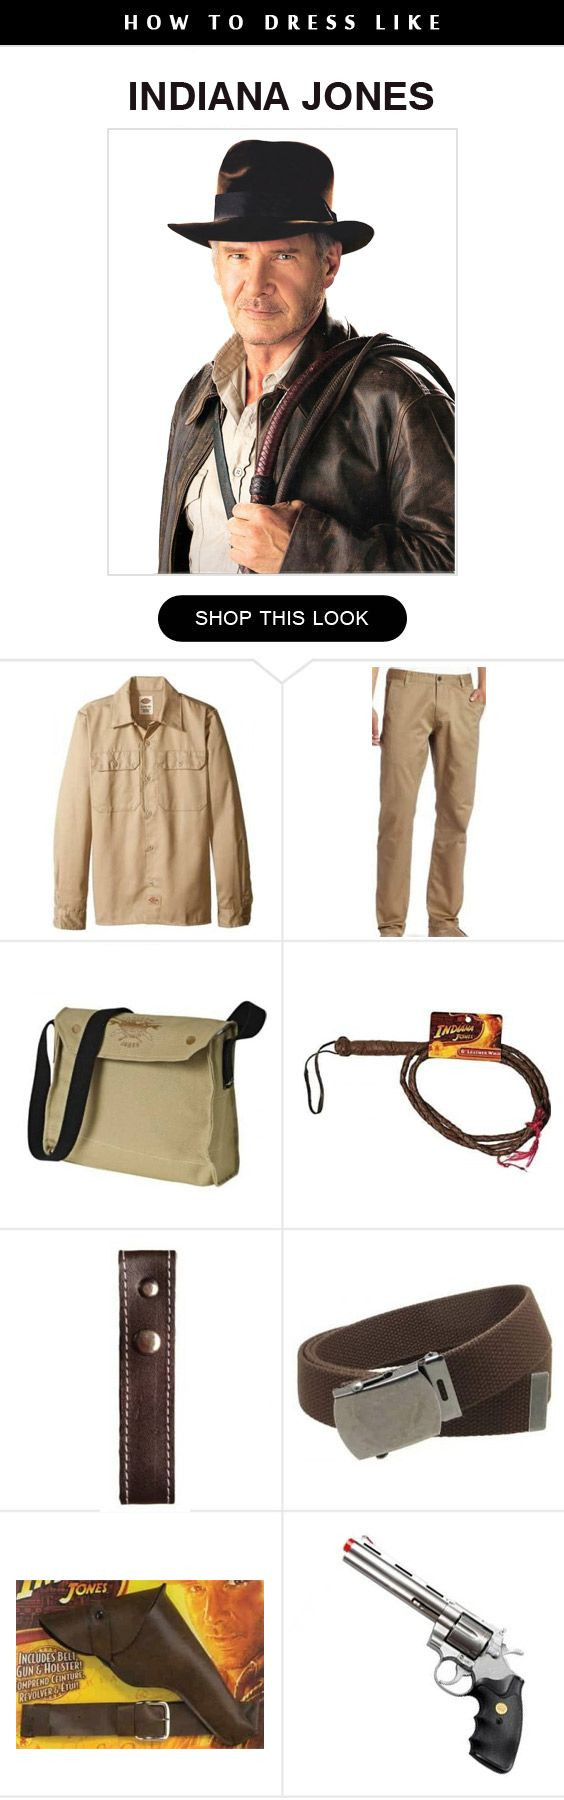 Best ideas about Indiana Jones Costume DIY
. Save or Pin Best 25 Indiana jones costume ideas on Pinterest Now.